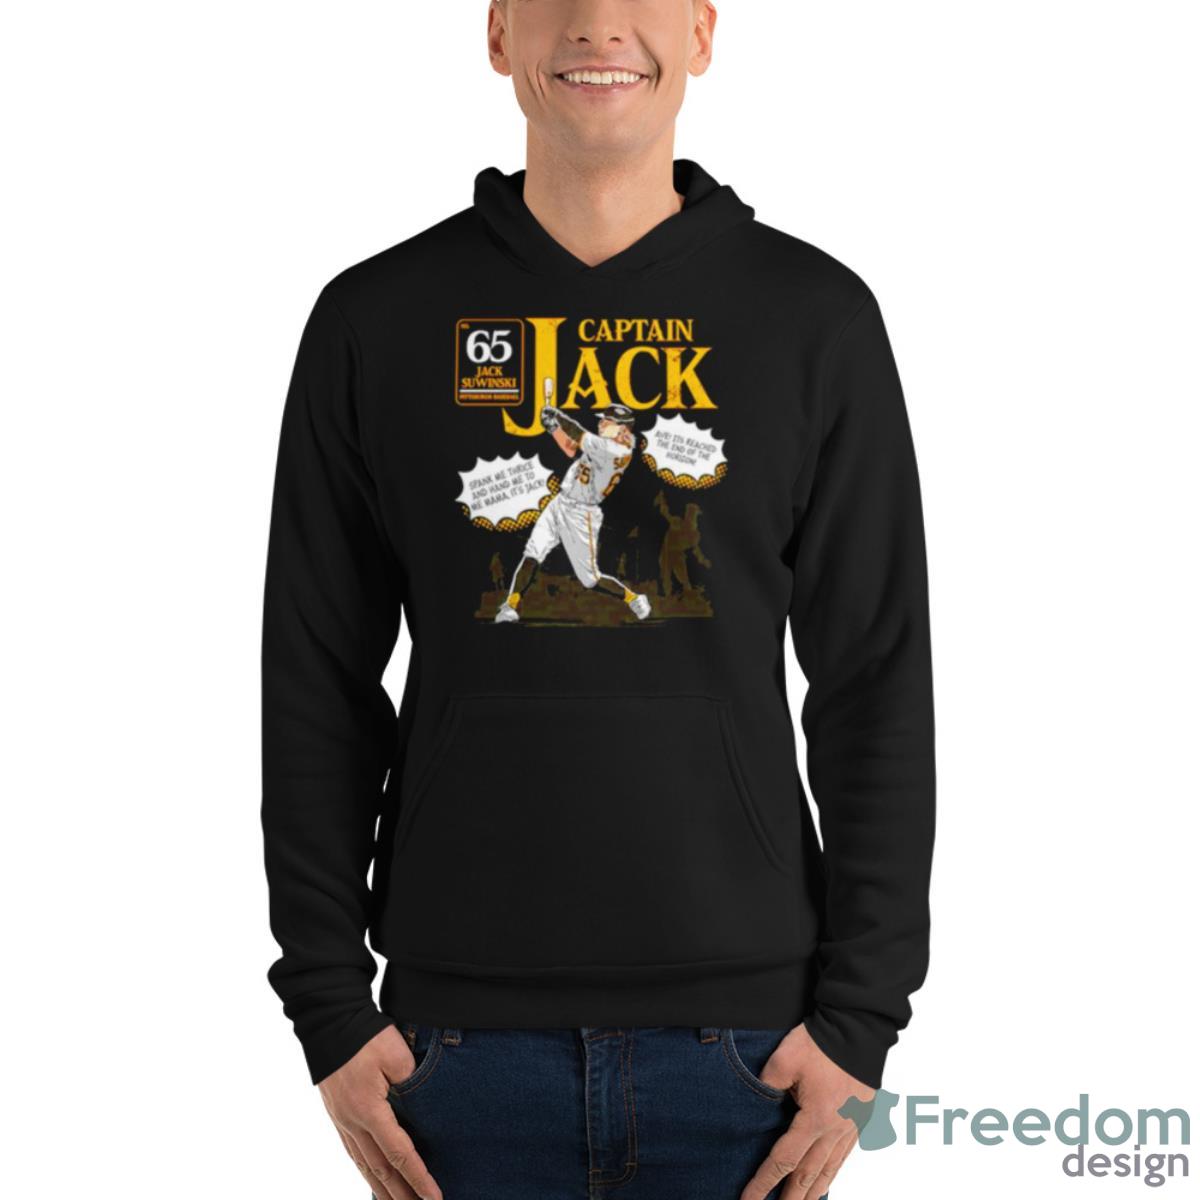 Captain Jack Suwinski spank me thrice and hand me to me mama it's Jack shirt,  hoodie, longsleeve, sweatshirt, v-neck tee